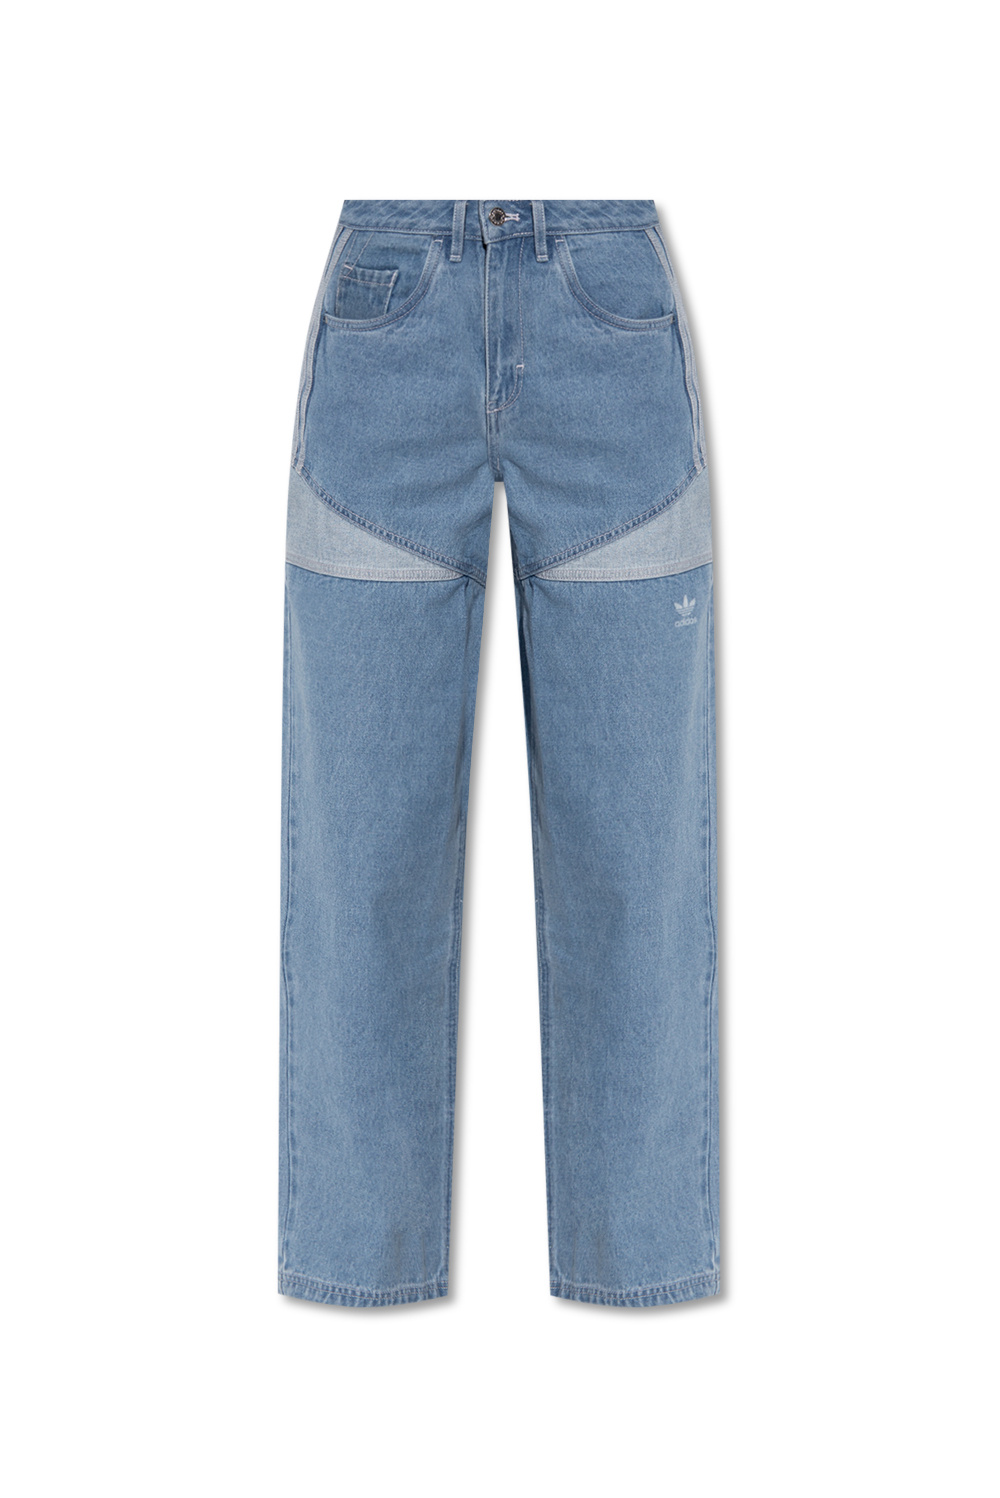 ADIDAS Originals Straight jeans | Women's Clothing Vitkac